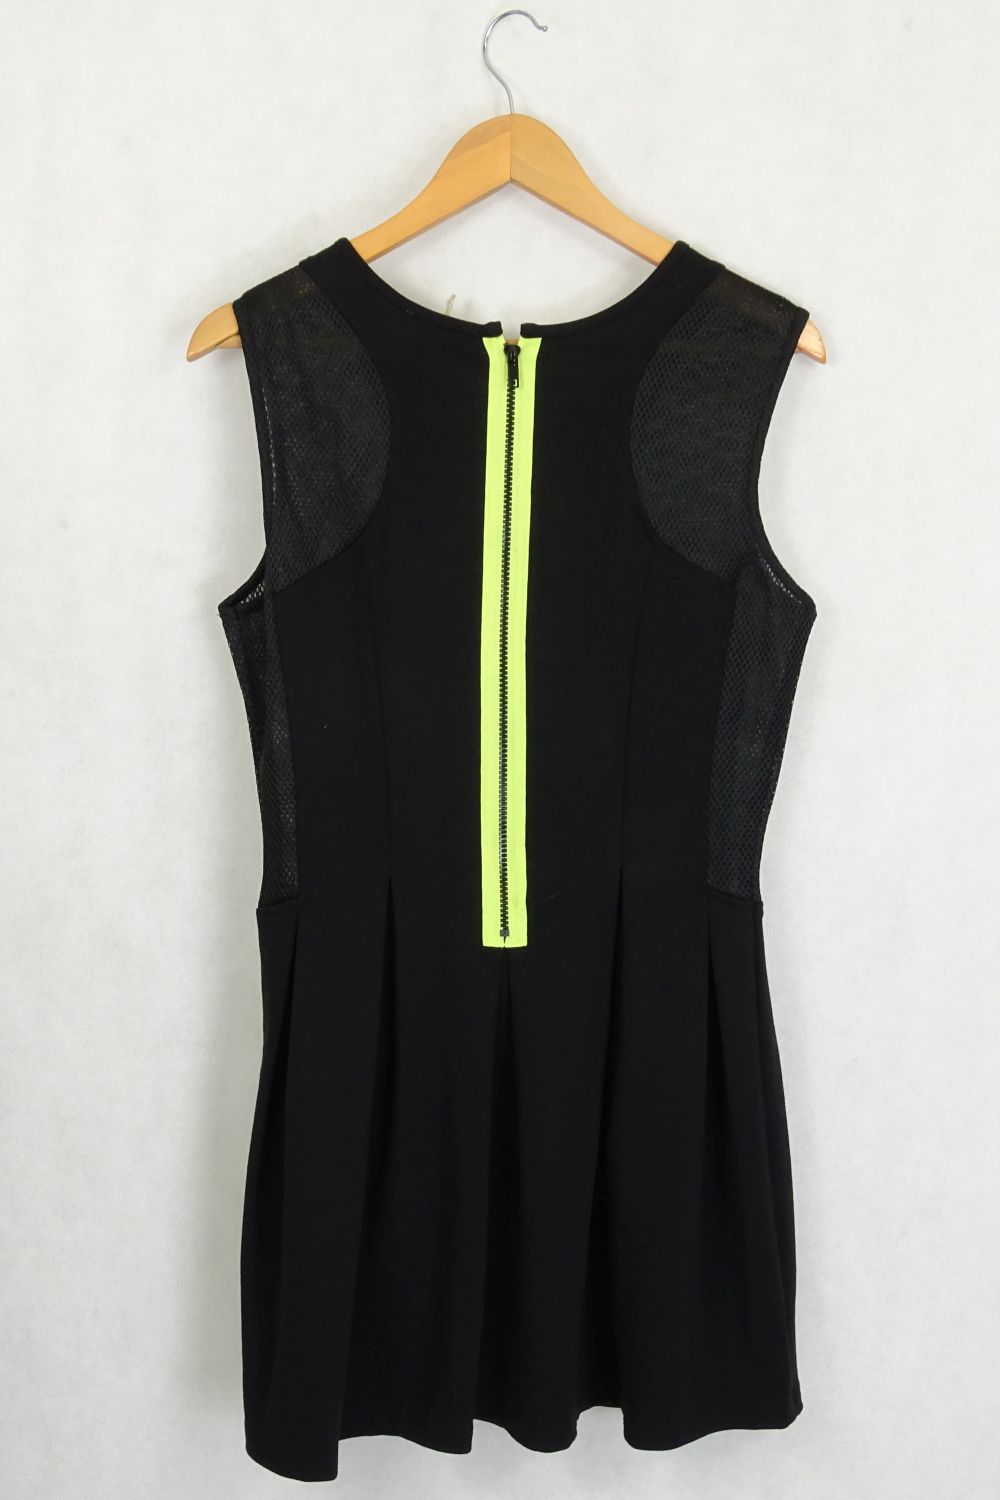 Sass Sleeveless Black Dress with Mesh Detail -12